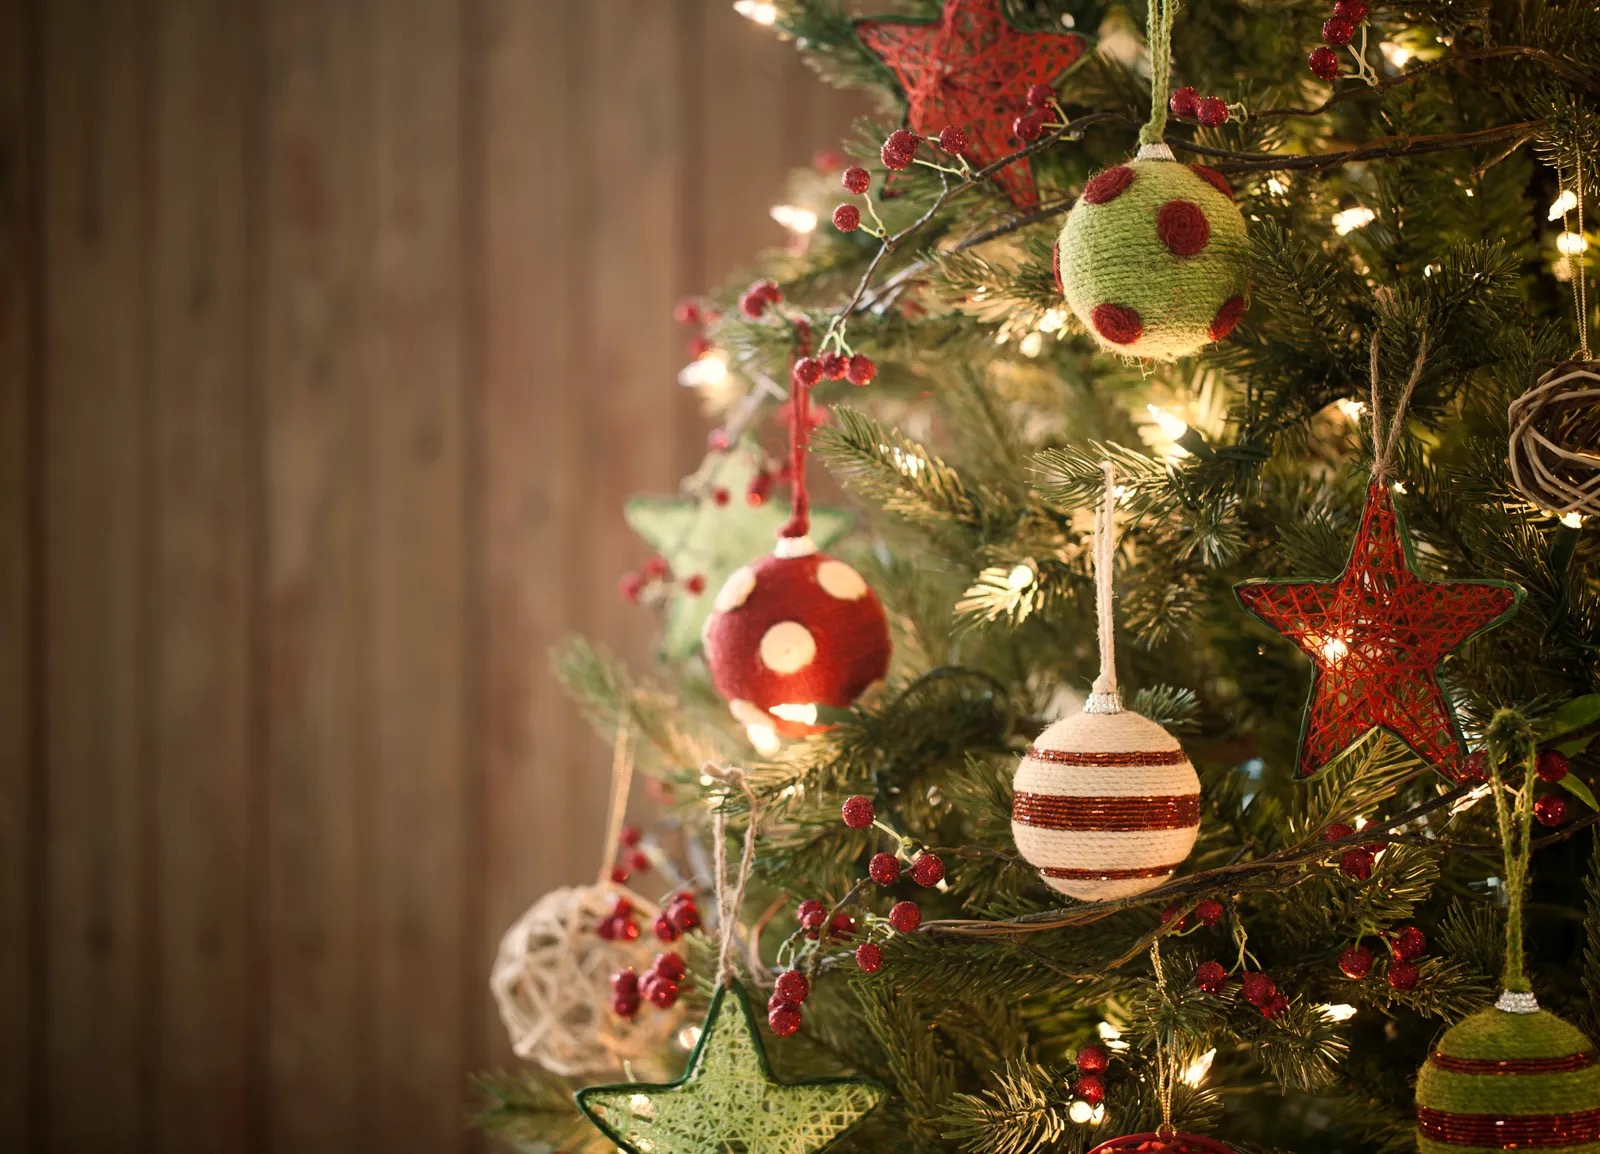 Christmas Trivia Questions Christmas tree decorations